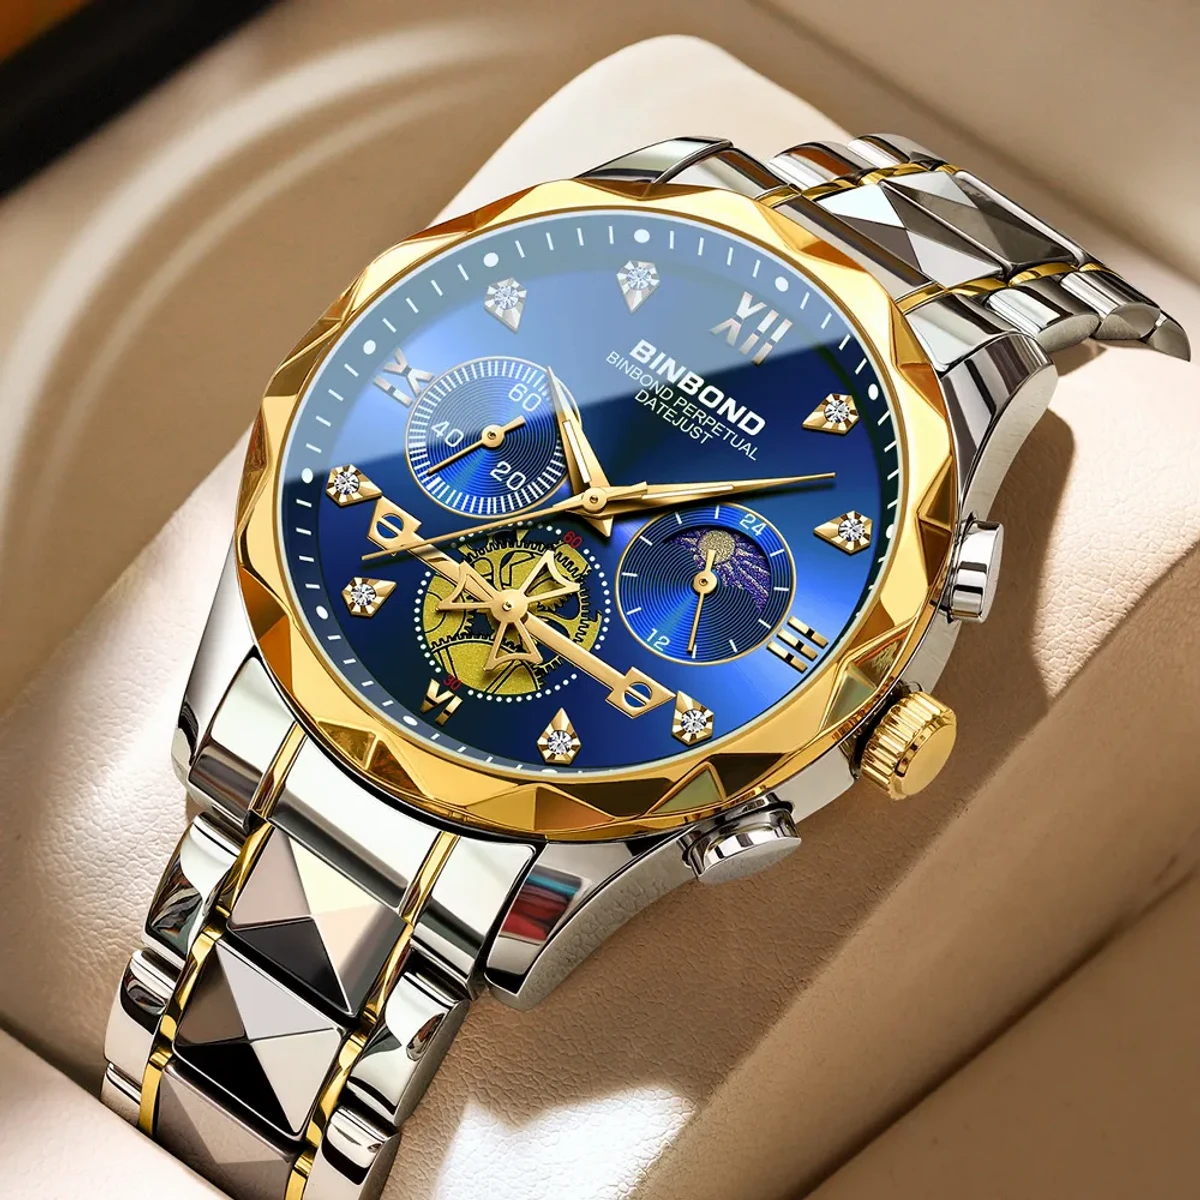 New Luxury Binbond Brand Men's Luminous Watches Stainless Steel Waterproof BINBOND Chronograph watch - Toton ar dial blue FOR MAN